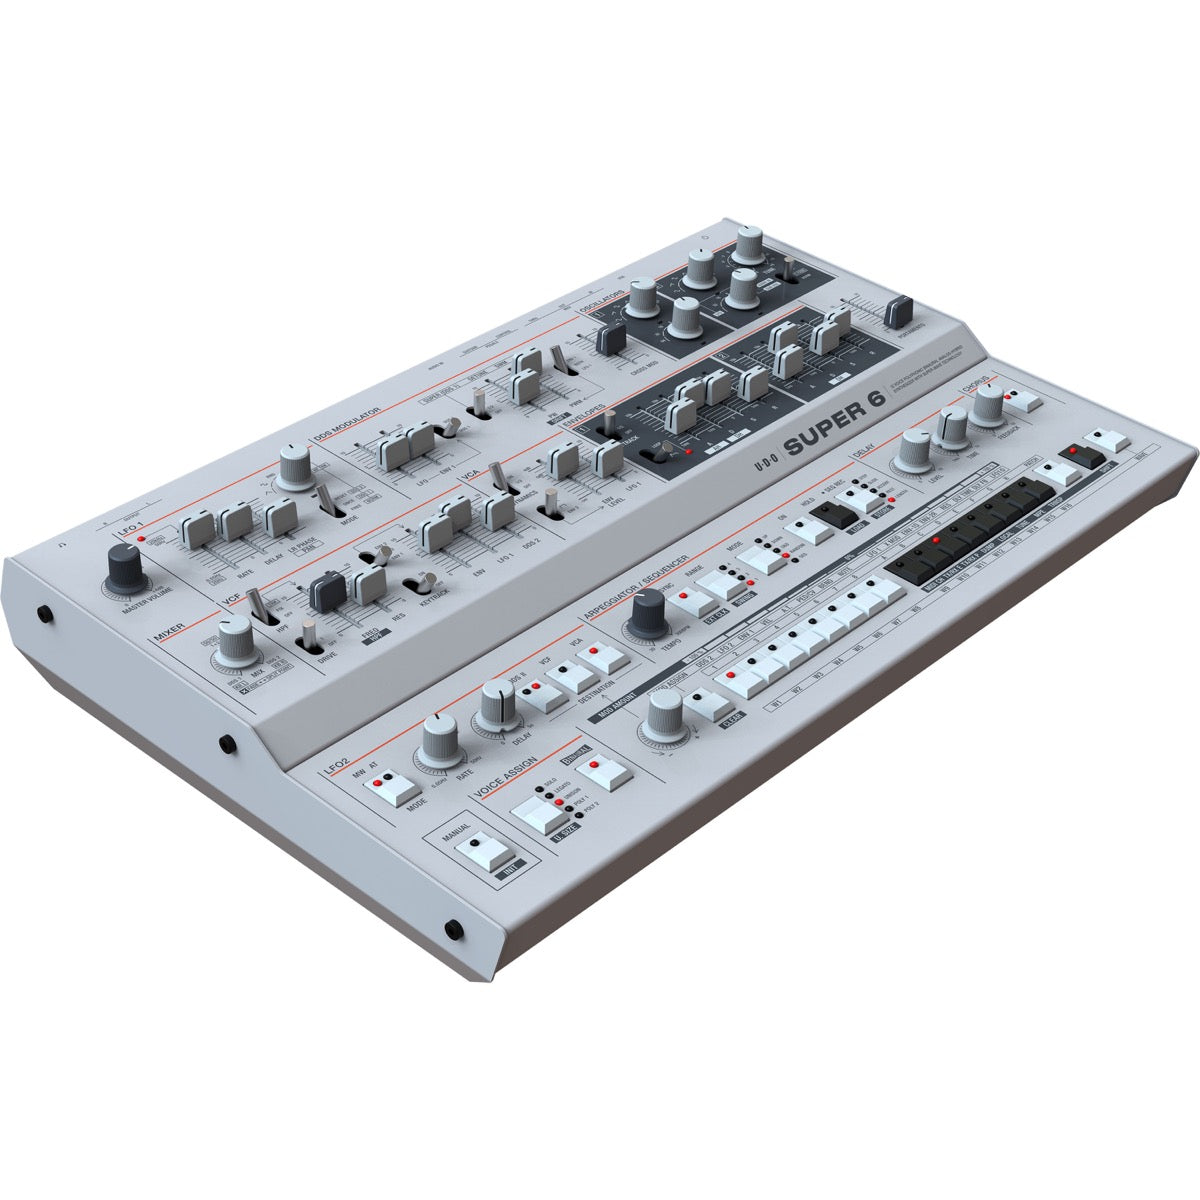 UDO Audio Super 6 Desktop 12-Voice Polyphonic Synthesizer CABLE KIT